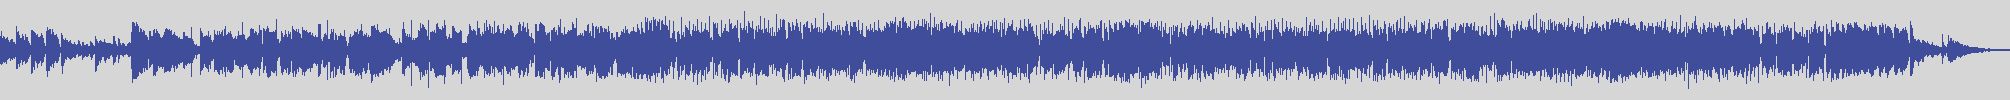 digiphonic_records [DPR013] Little Tony - Non è Stata Lei [Original Mix] audio wave form